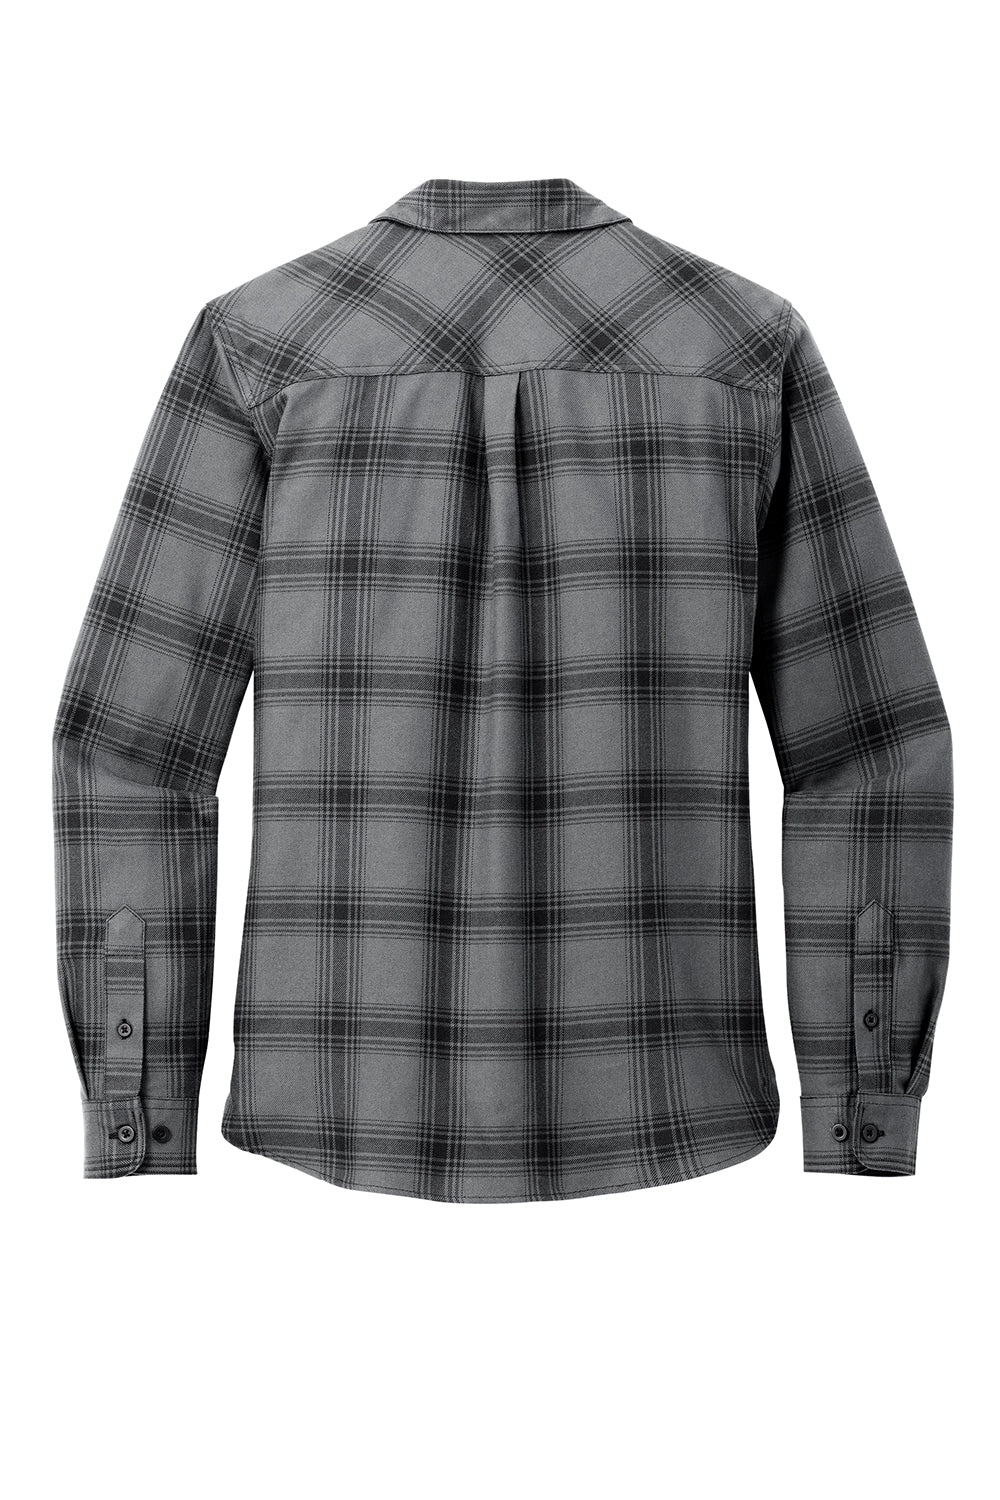 Port Authority LW669 Womens Plaid Flannel Long Sleeve Button Down Shirt Grey/Black Plaid Flat Back